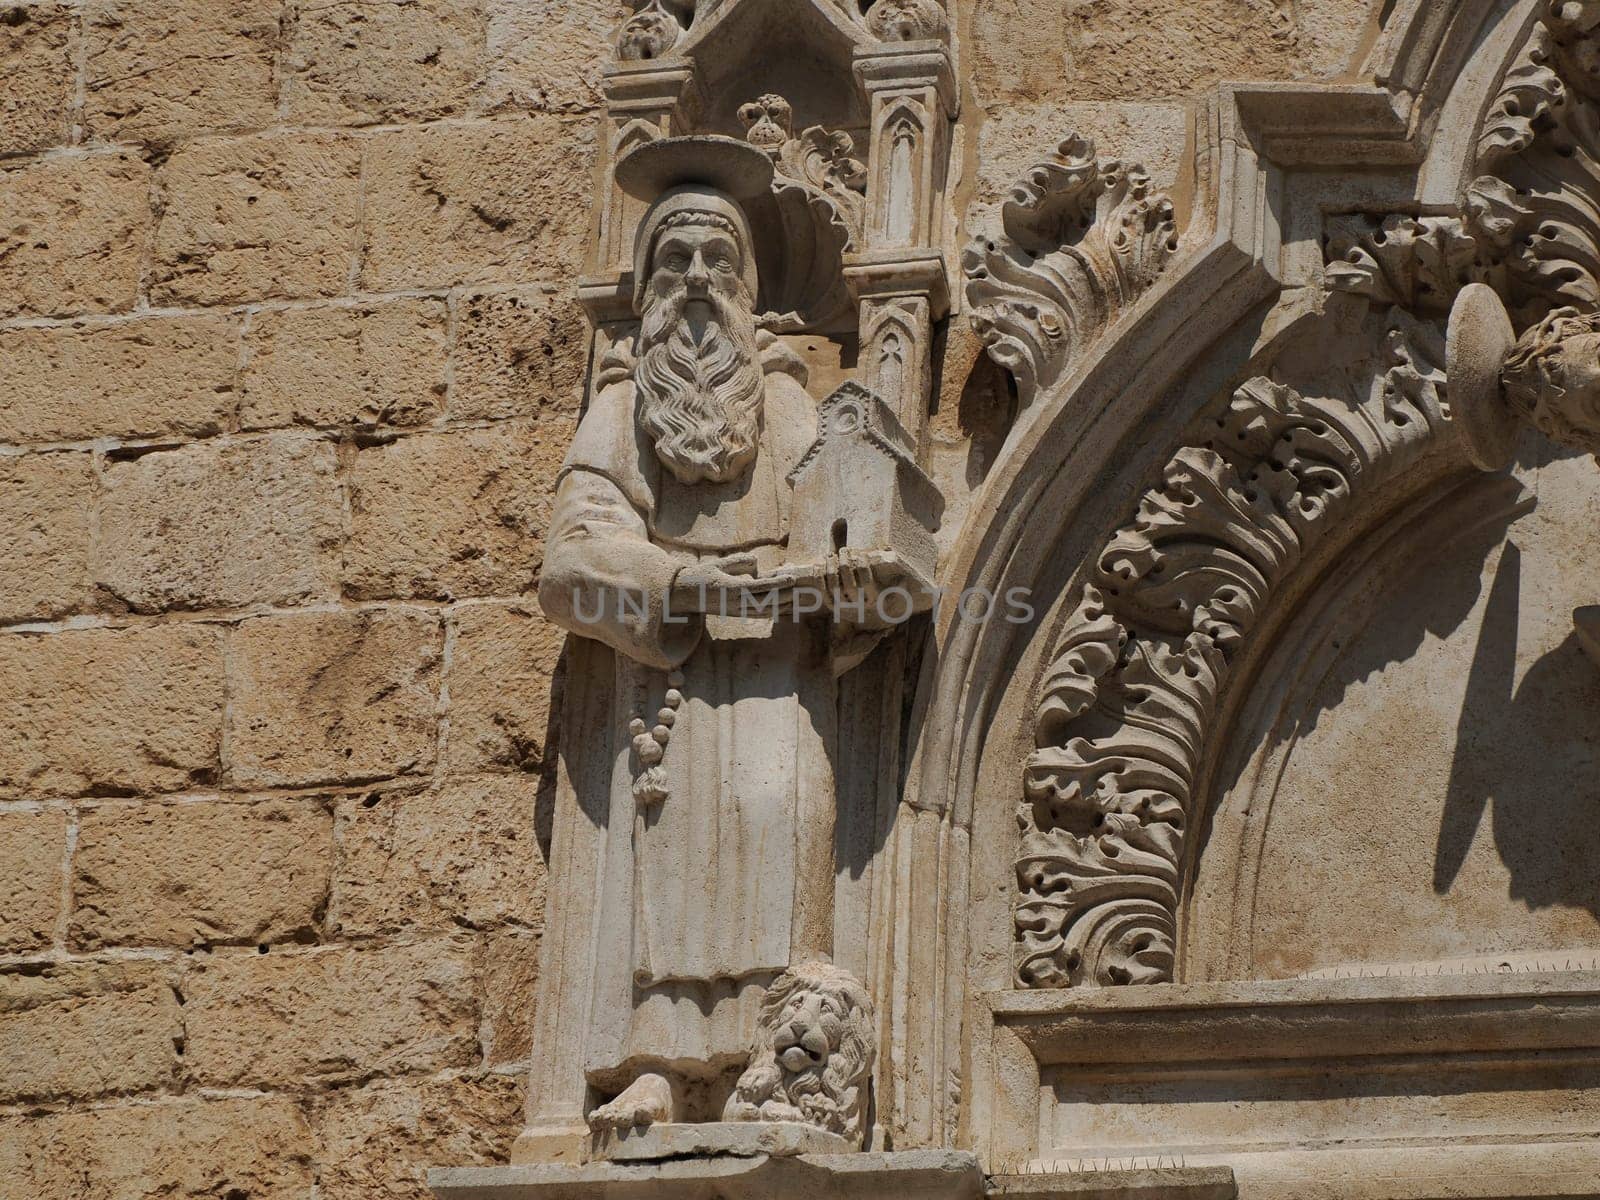 Detail of sculpture in Dubrovnik - Croatia medieval town by AndreaIzzotti